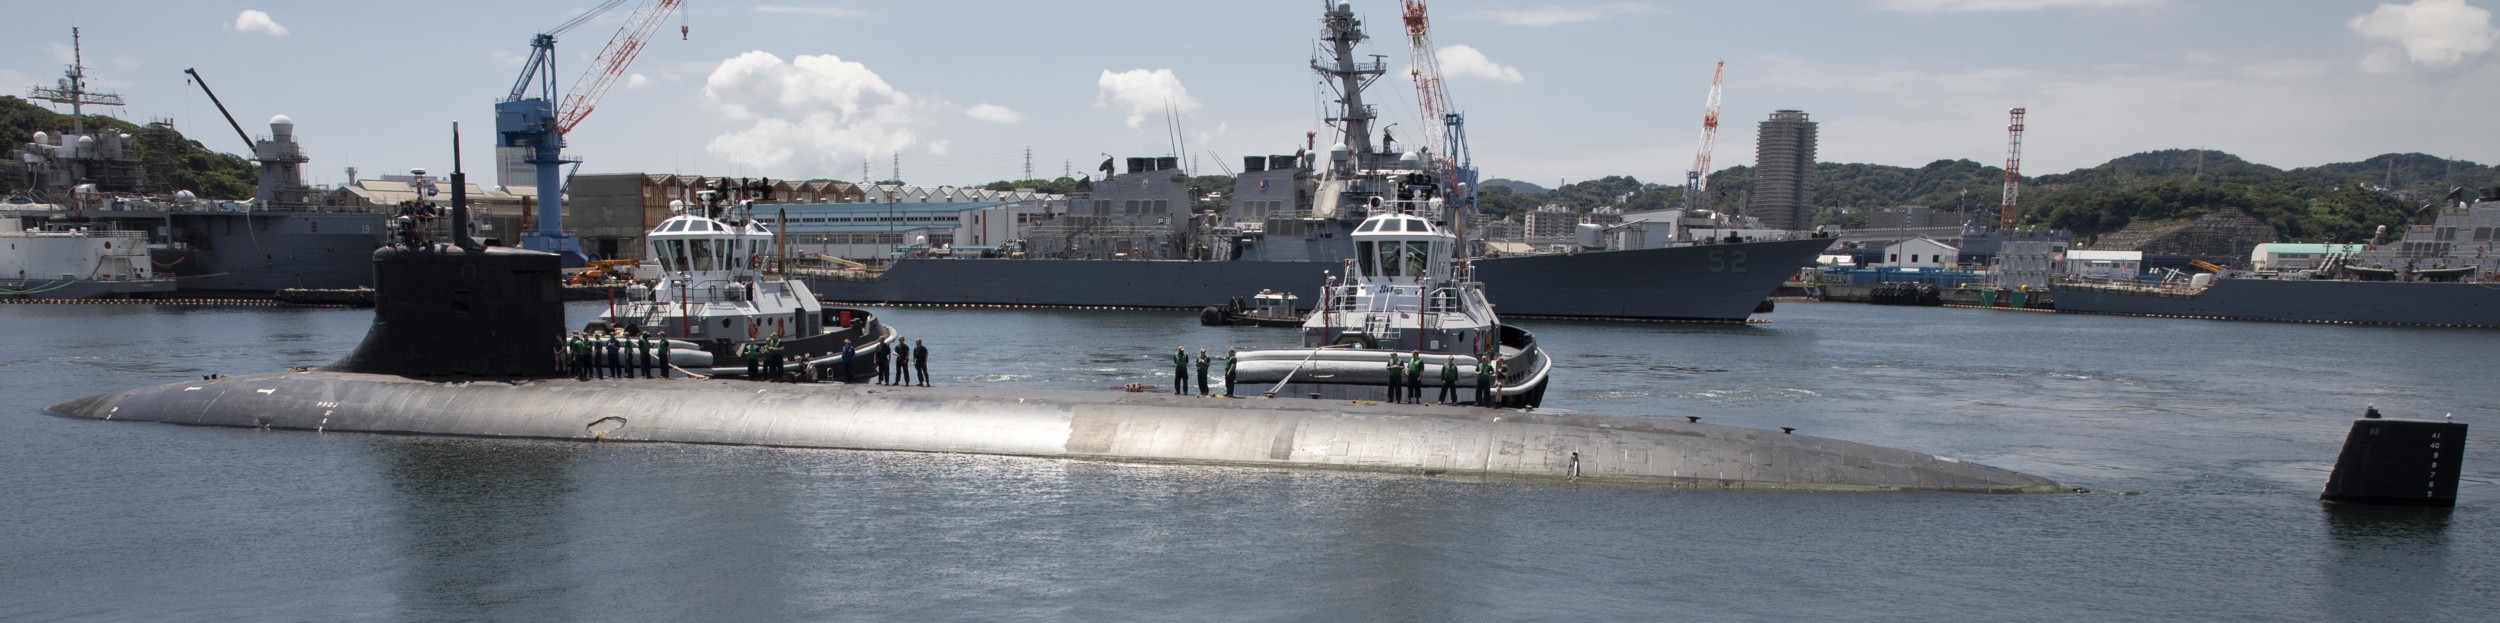 ssn-22 uss connecticut seawolf class attack submarine us navy 56 fleact yokosuka japan